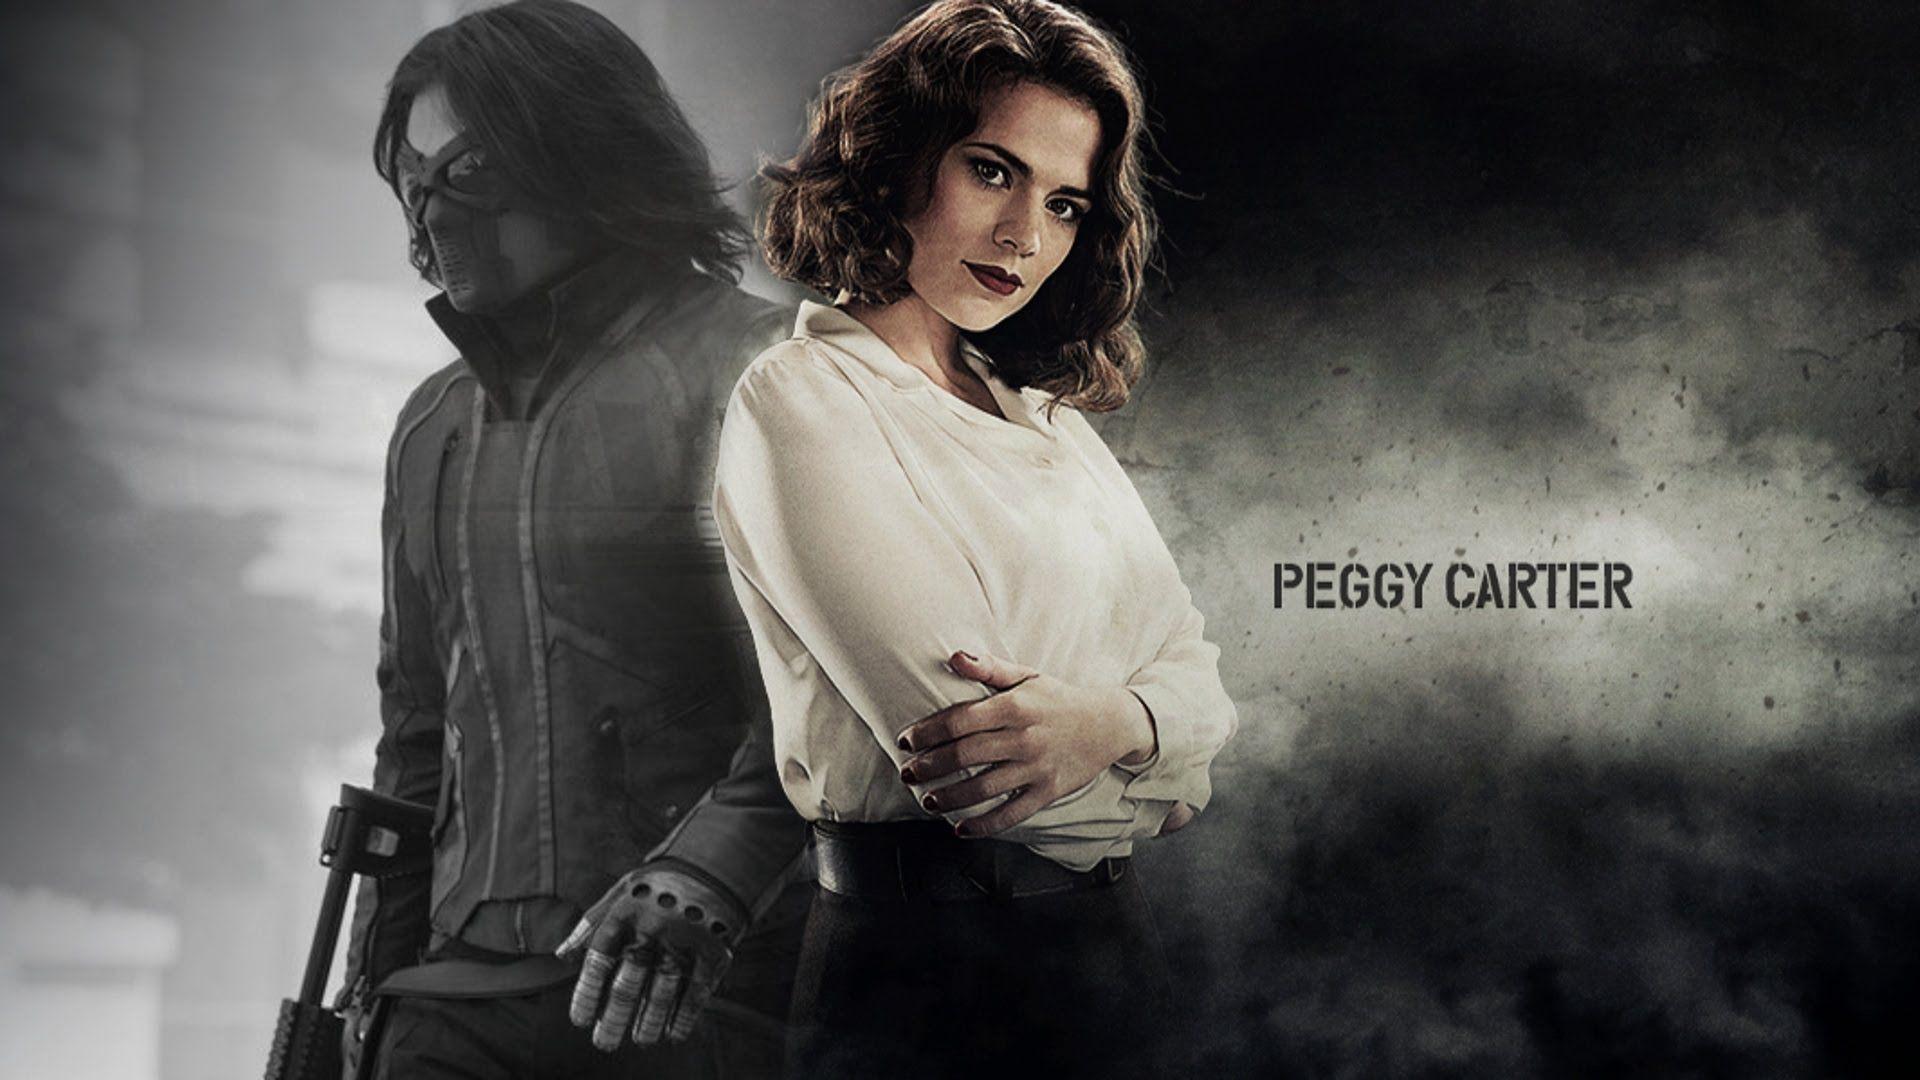 Agent Carter Art Poster wallpapers HD 2016 in Agent Carter